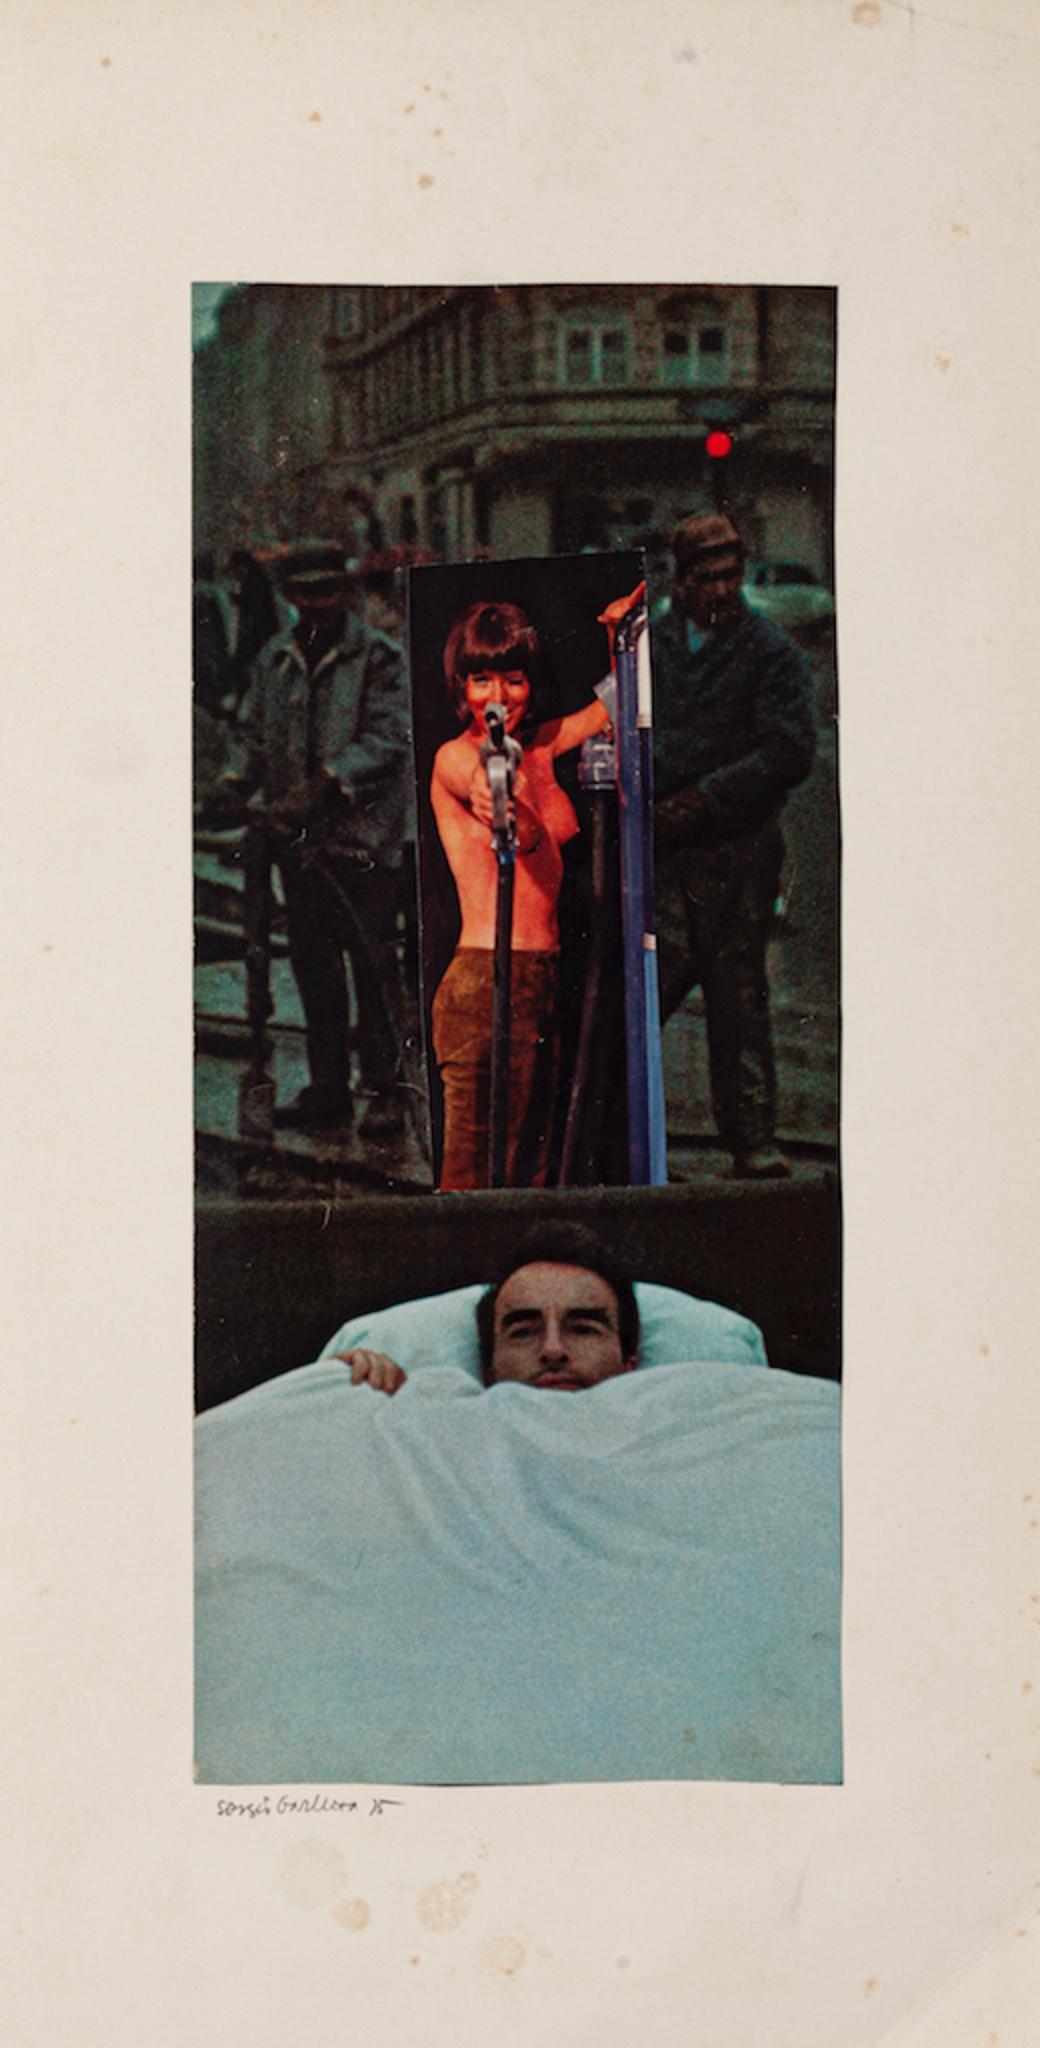 Dreaming - Original Collage by Sergio Barletta - 1975